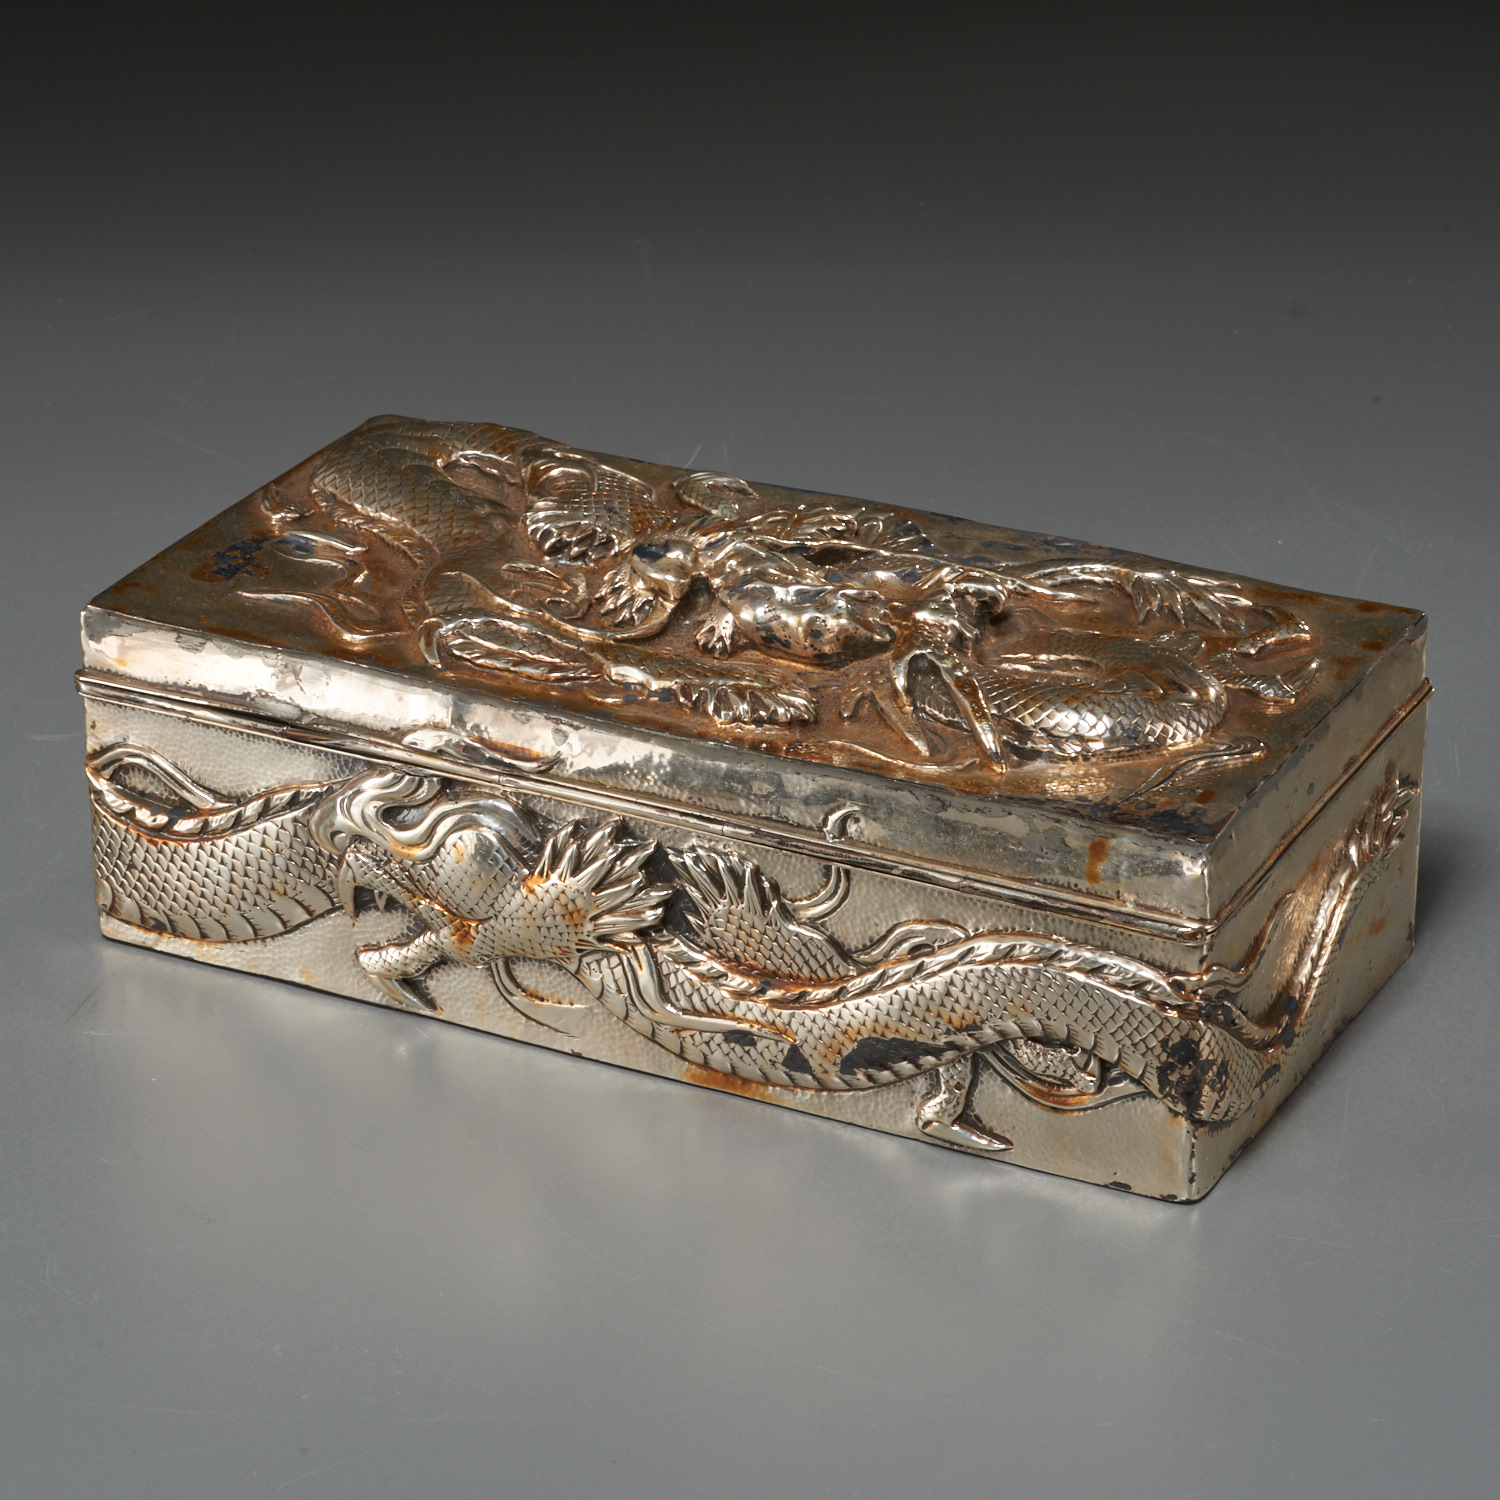 Kuhn & Komor Asian Export silver dragon box - Image 4 of 8